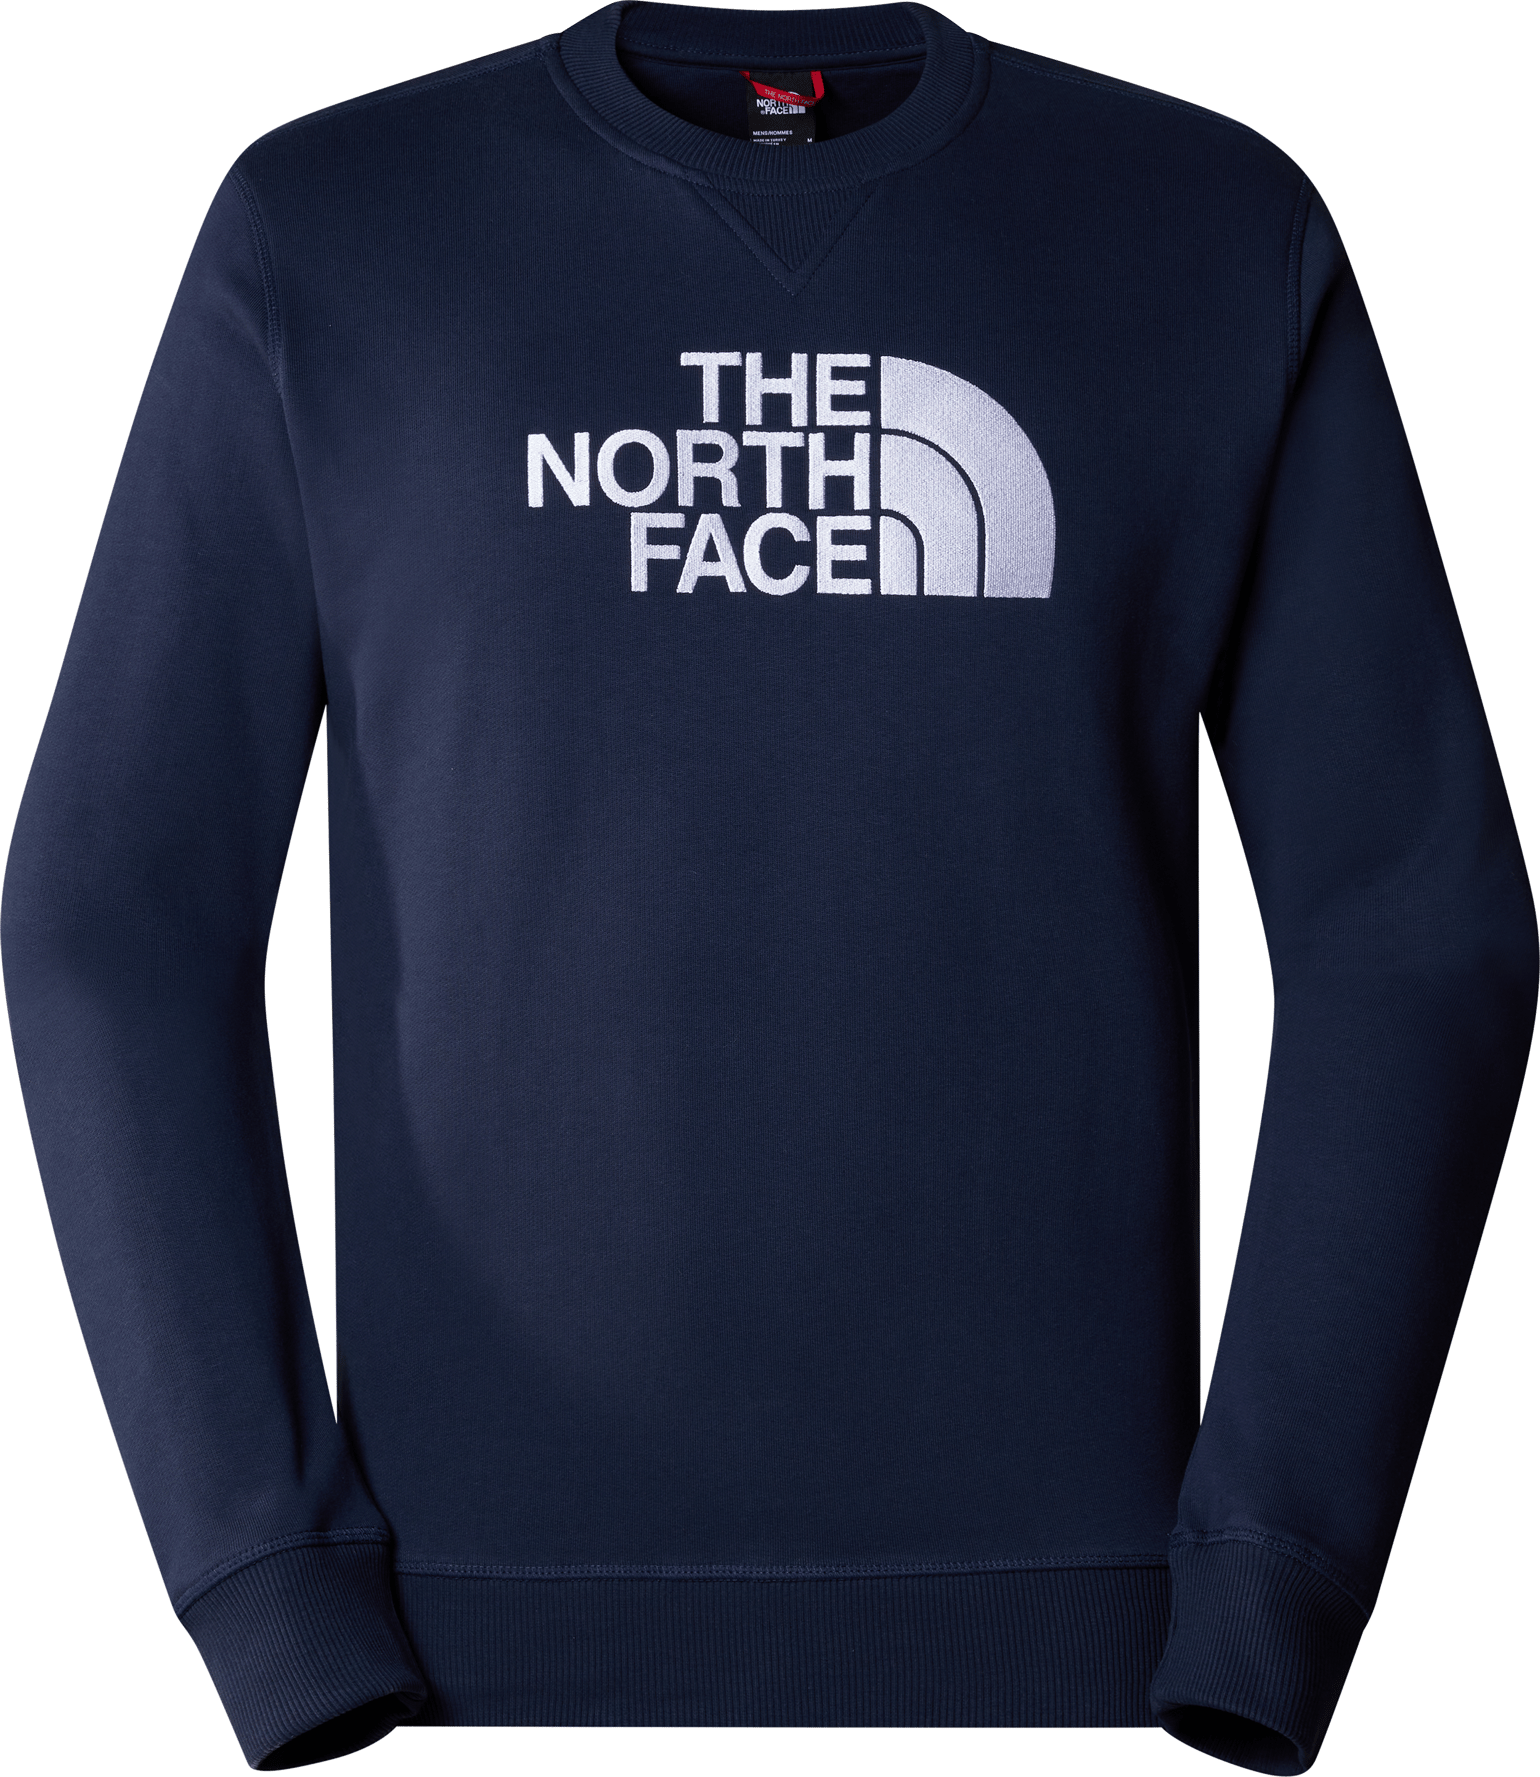 The North Face Men's Drew Peak Crew TNF White/TNF Black